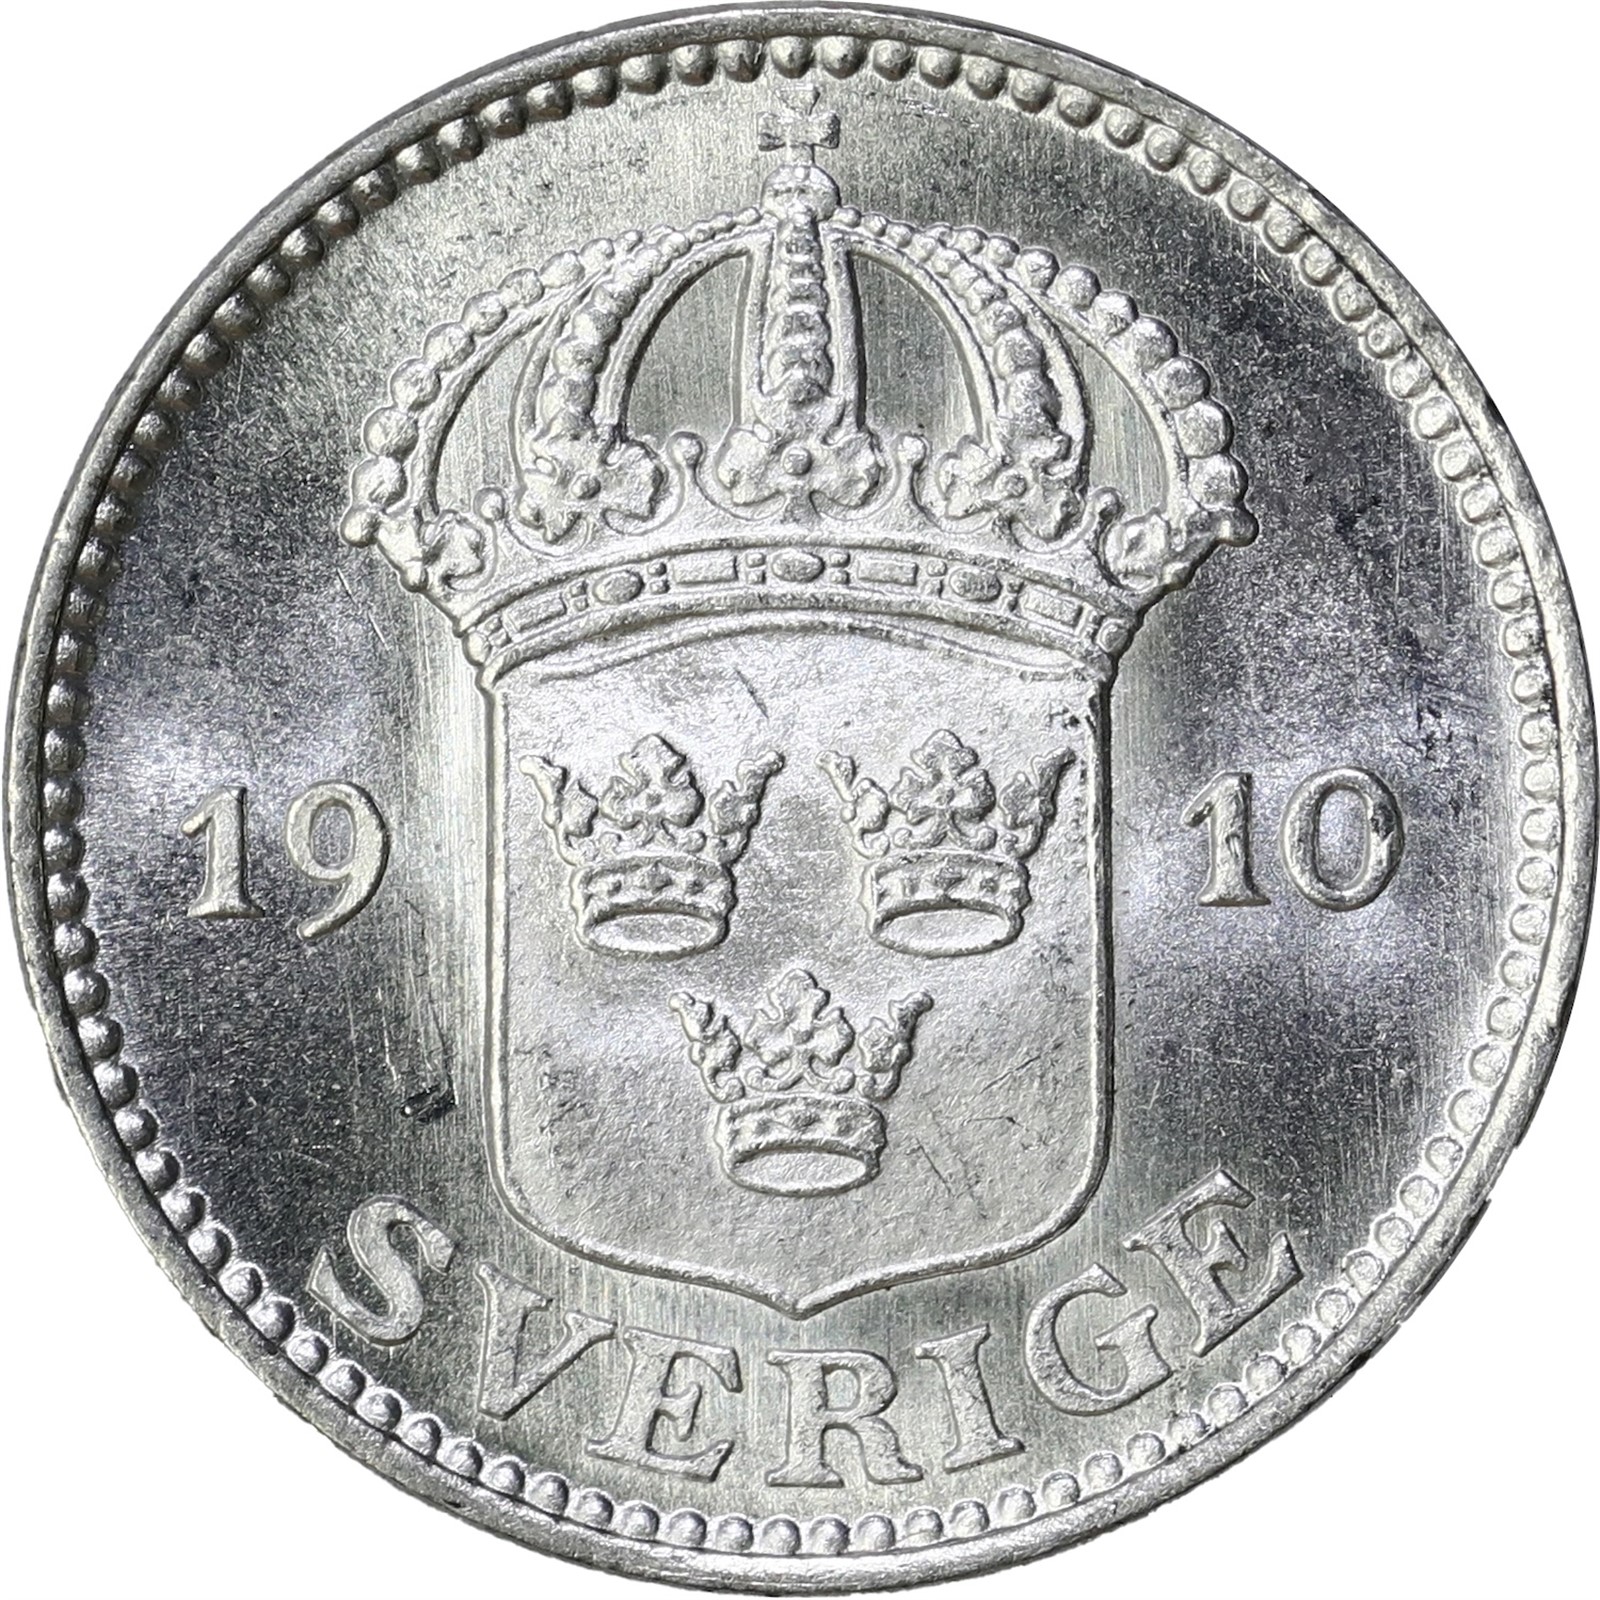 SWEDEN. Gustav V. 25 Öre 1910 Kv 0 (Choice UNC)